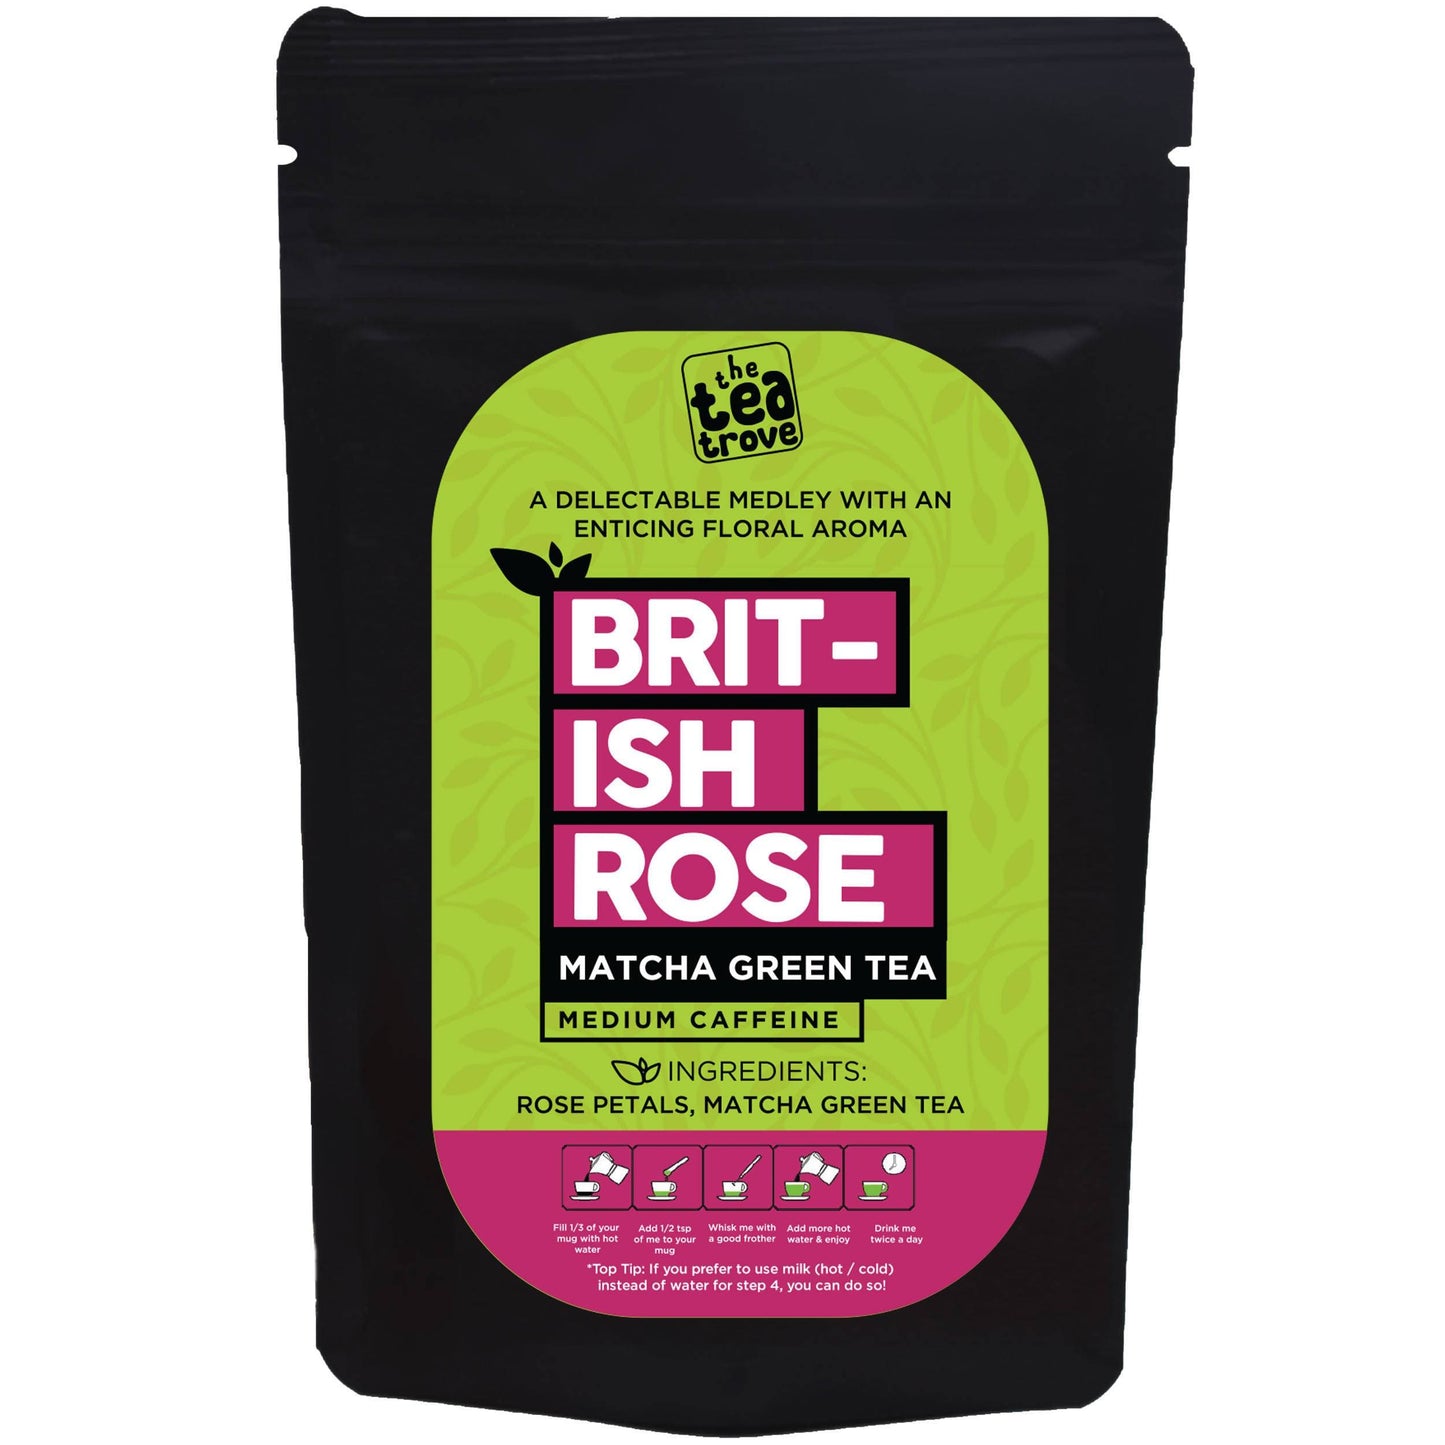 The Tea Trove - British Rose Matcha Green Tea